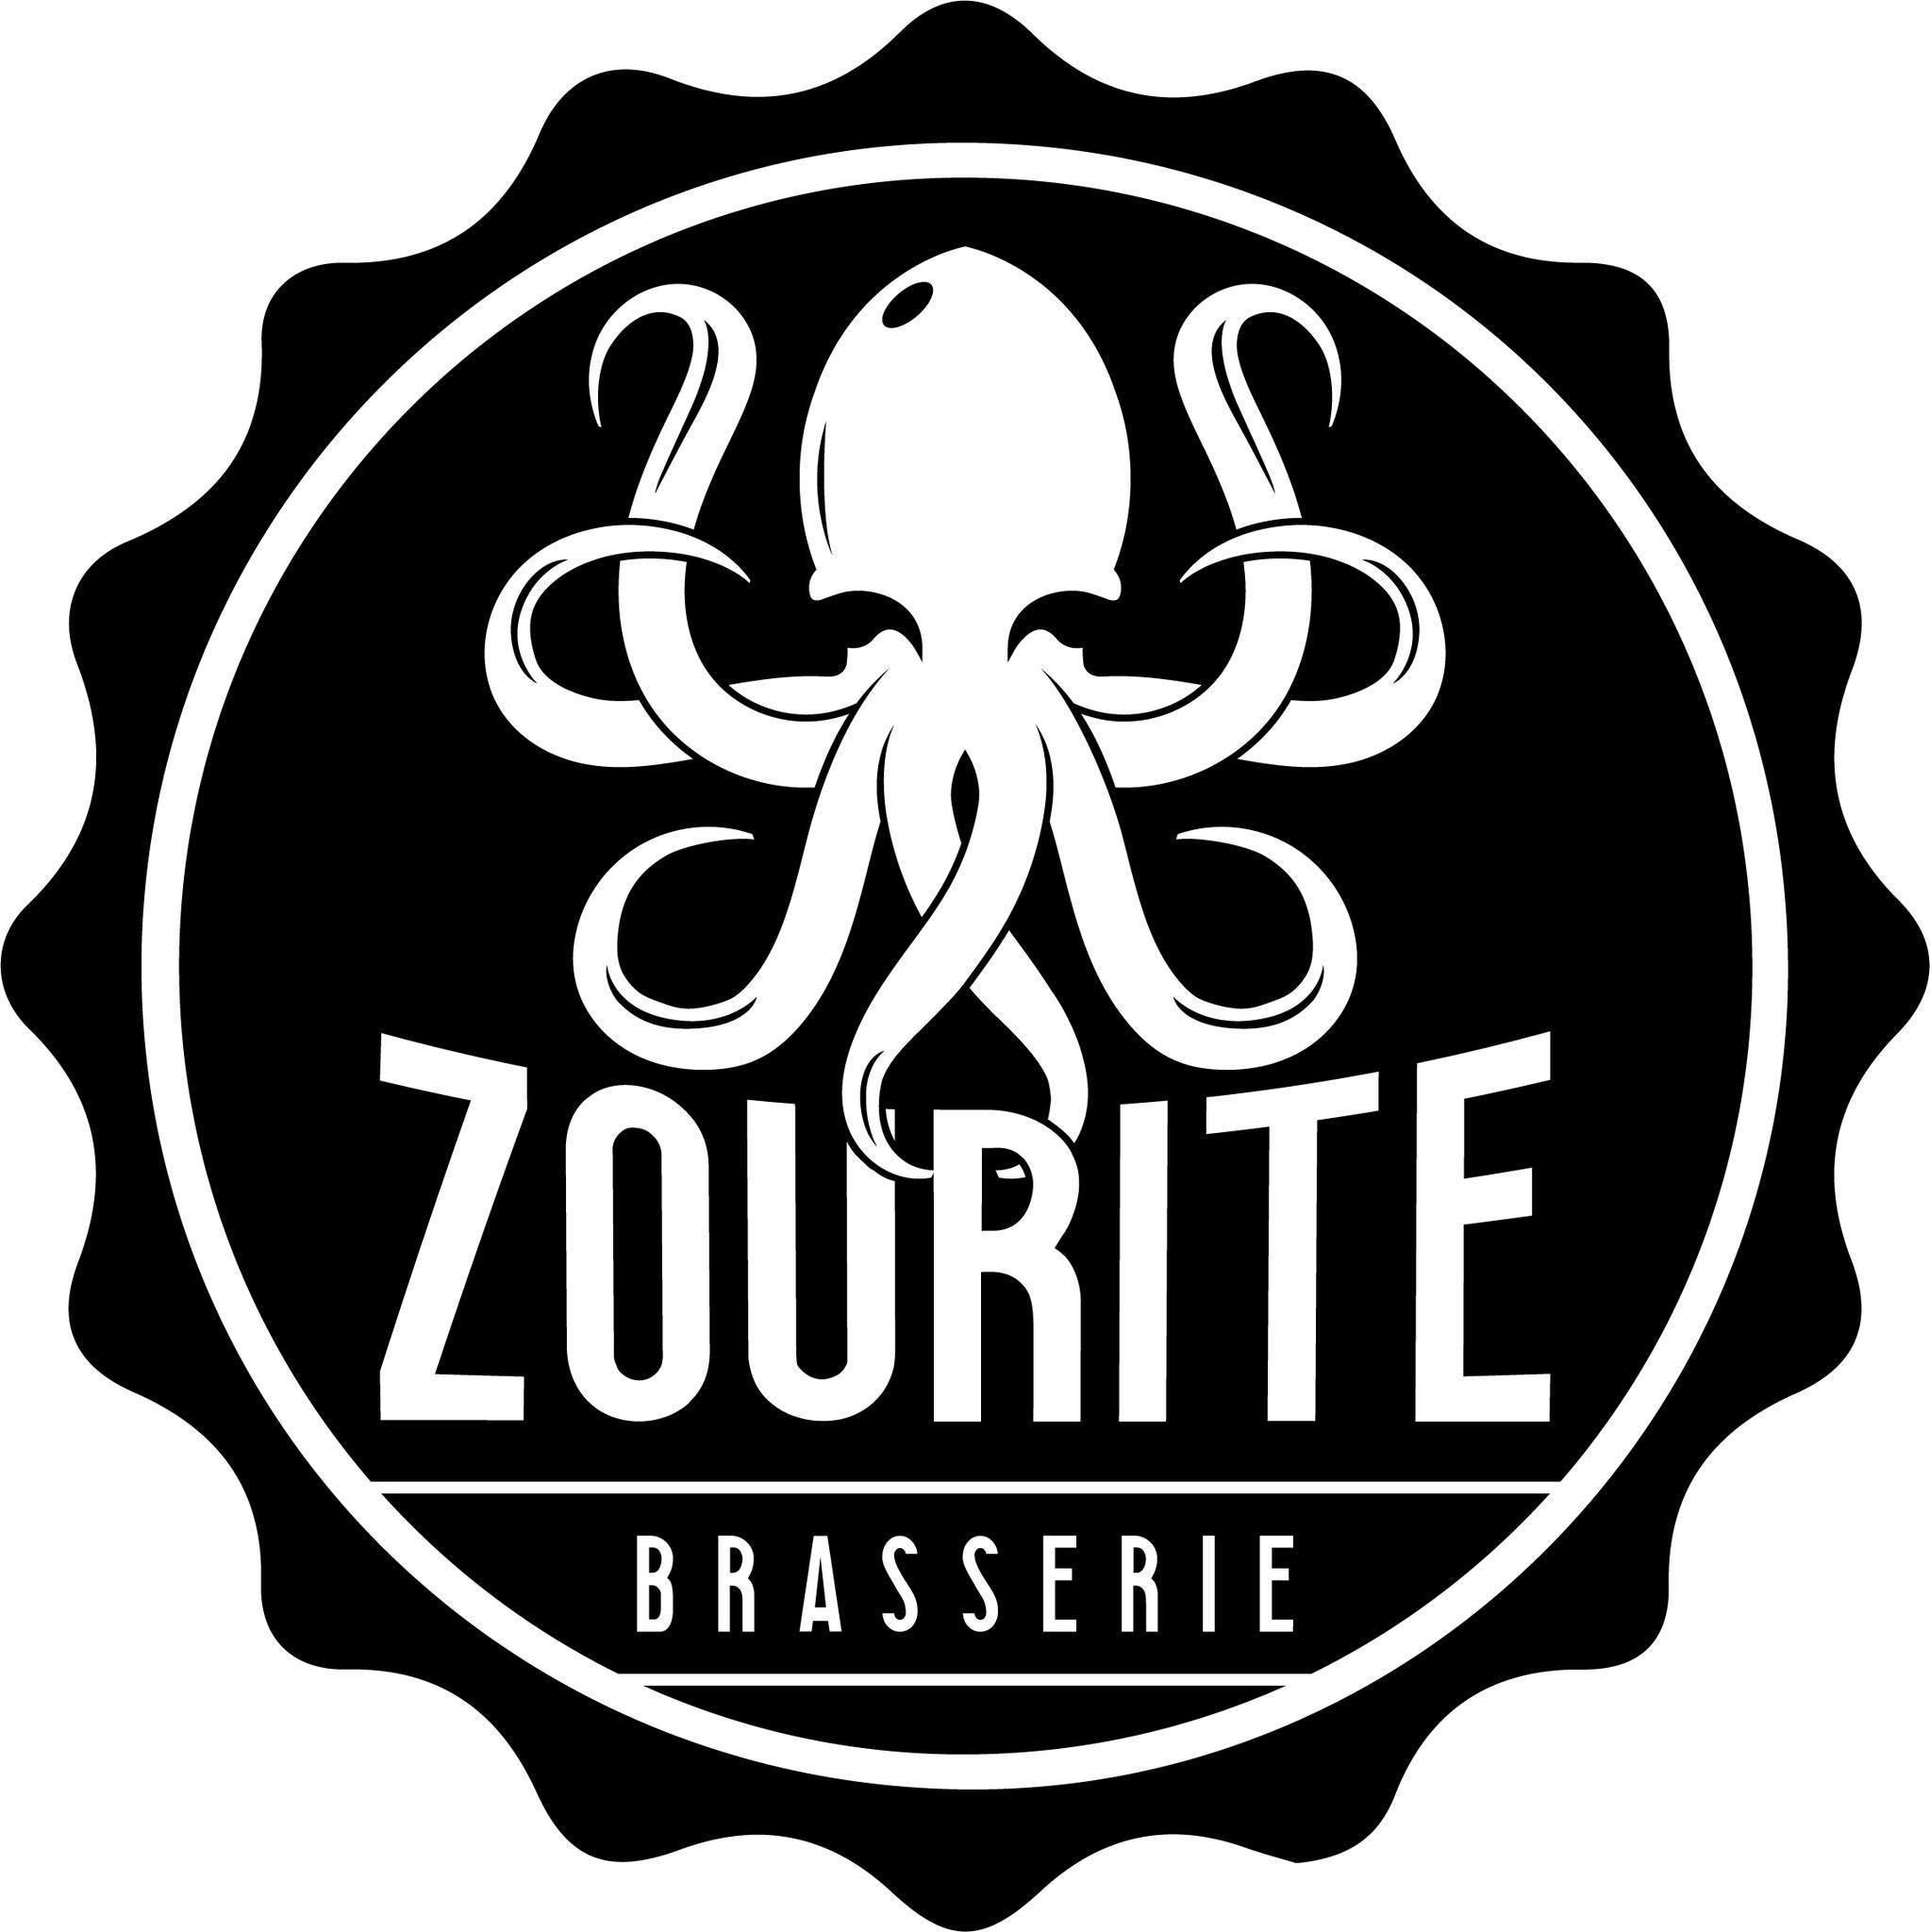 Brasserie Zourite